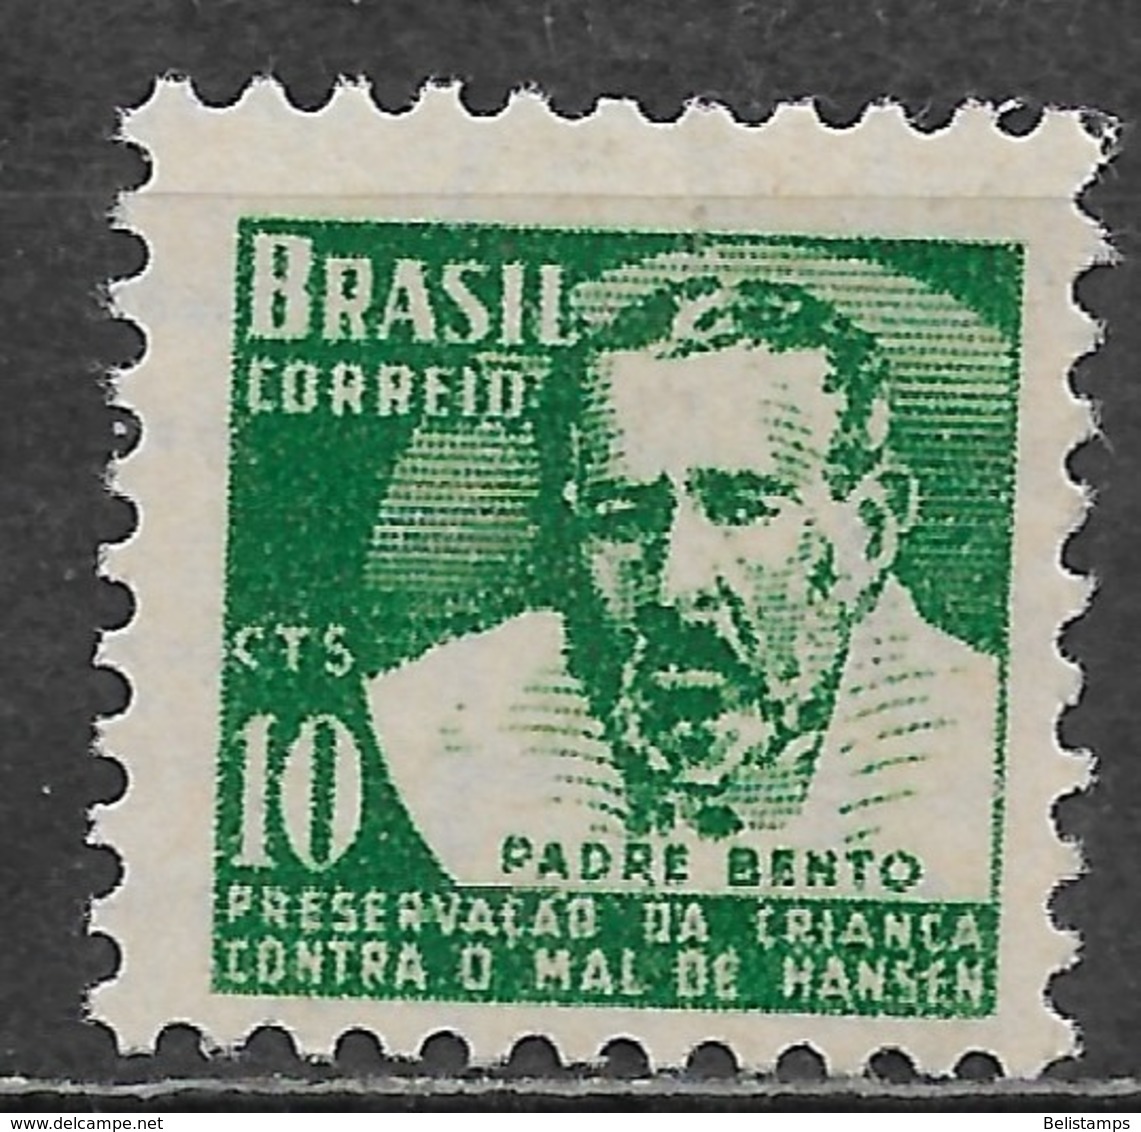 Brazil 1958. Scott #RA7 (MNH) Father Bento Dias Pacheco - Postage Due